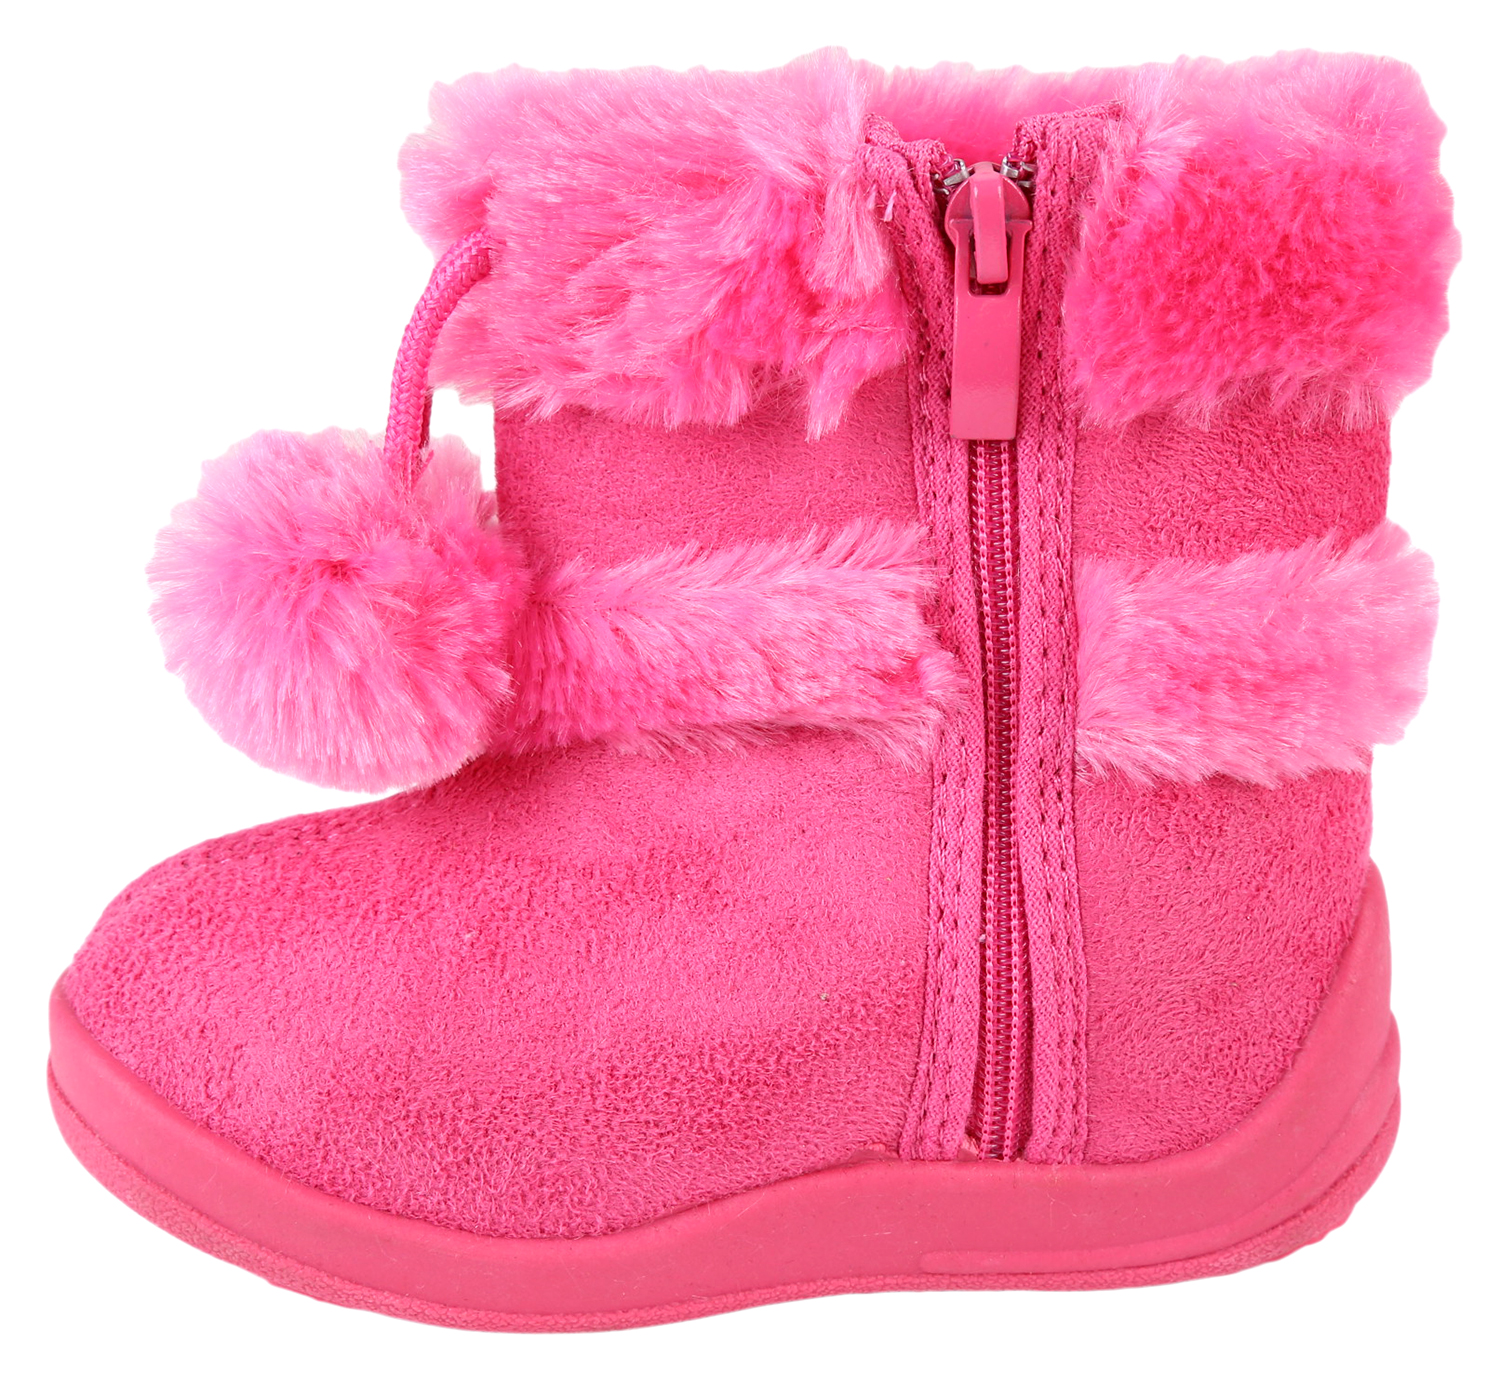 Kali Footwear Girl's Zello Boots for Toddler Girls | Glitter Boots | Pom Pom | Hot Pink 9 Toddler - image 2 of 5